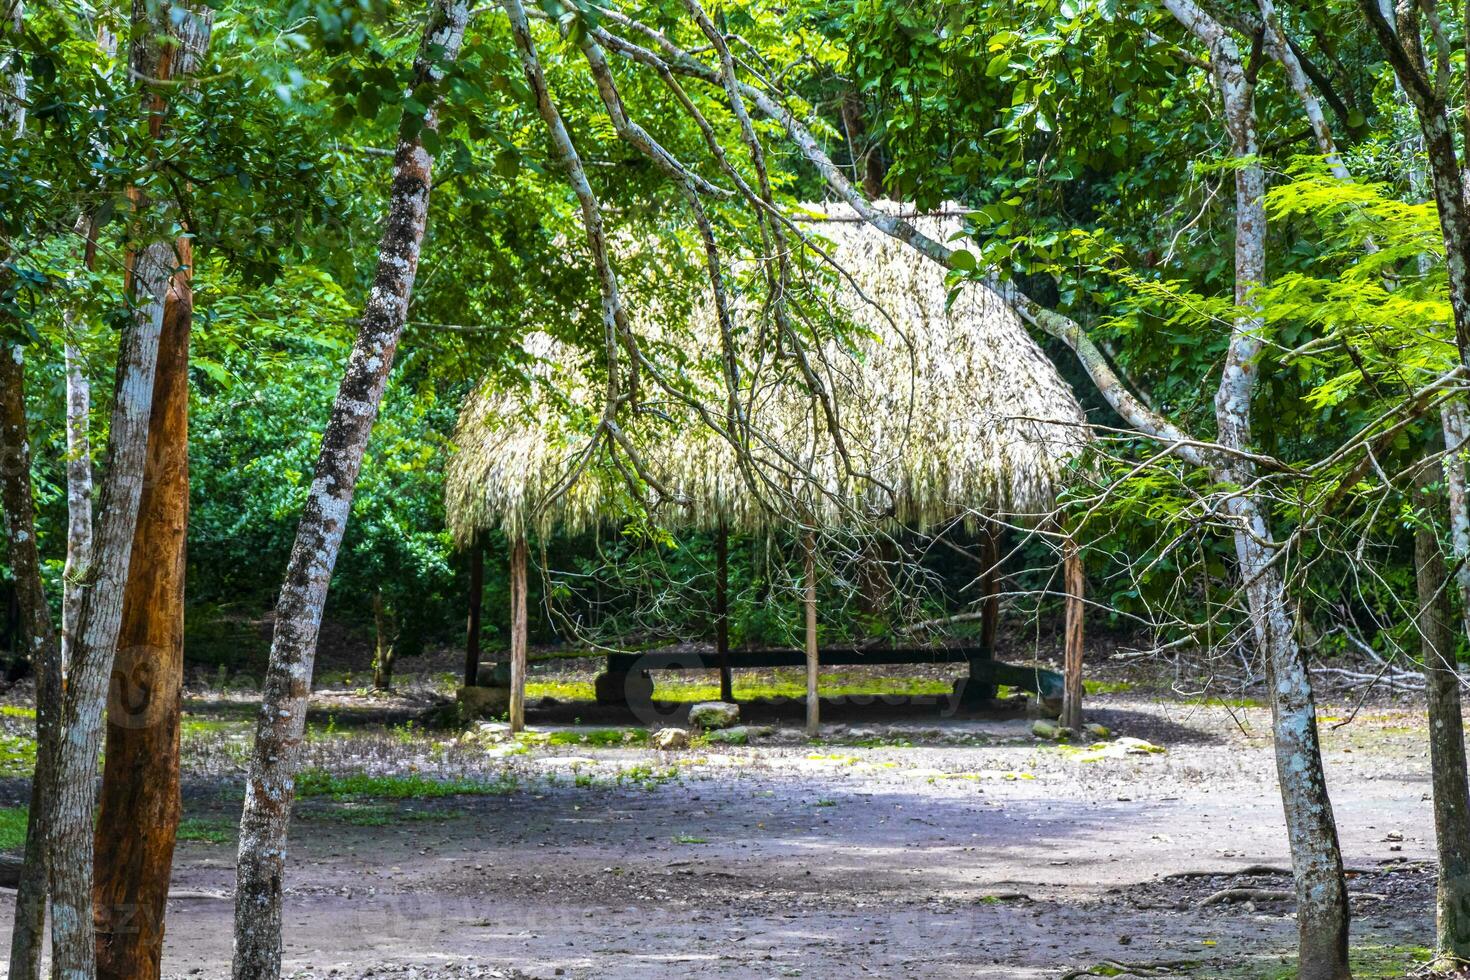 Palapa hut house cabin in tropical jungle Coba ruins Mexico. photo